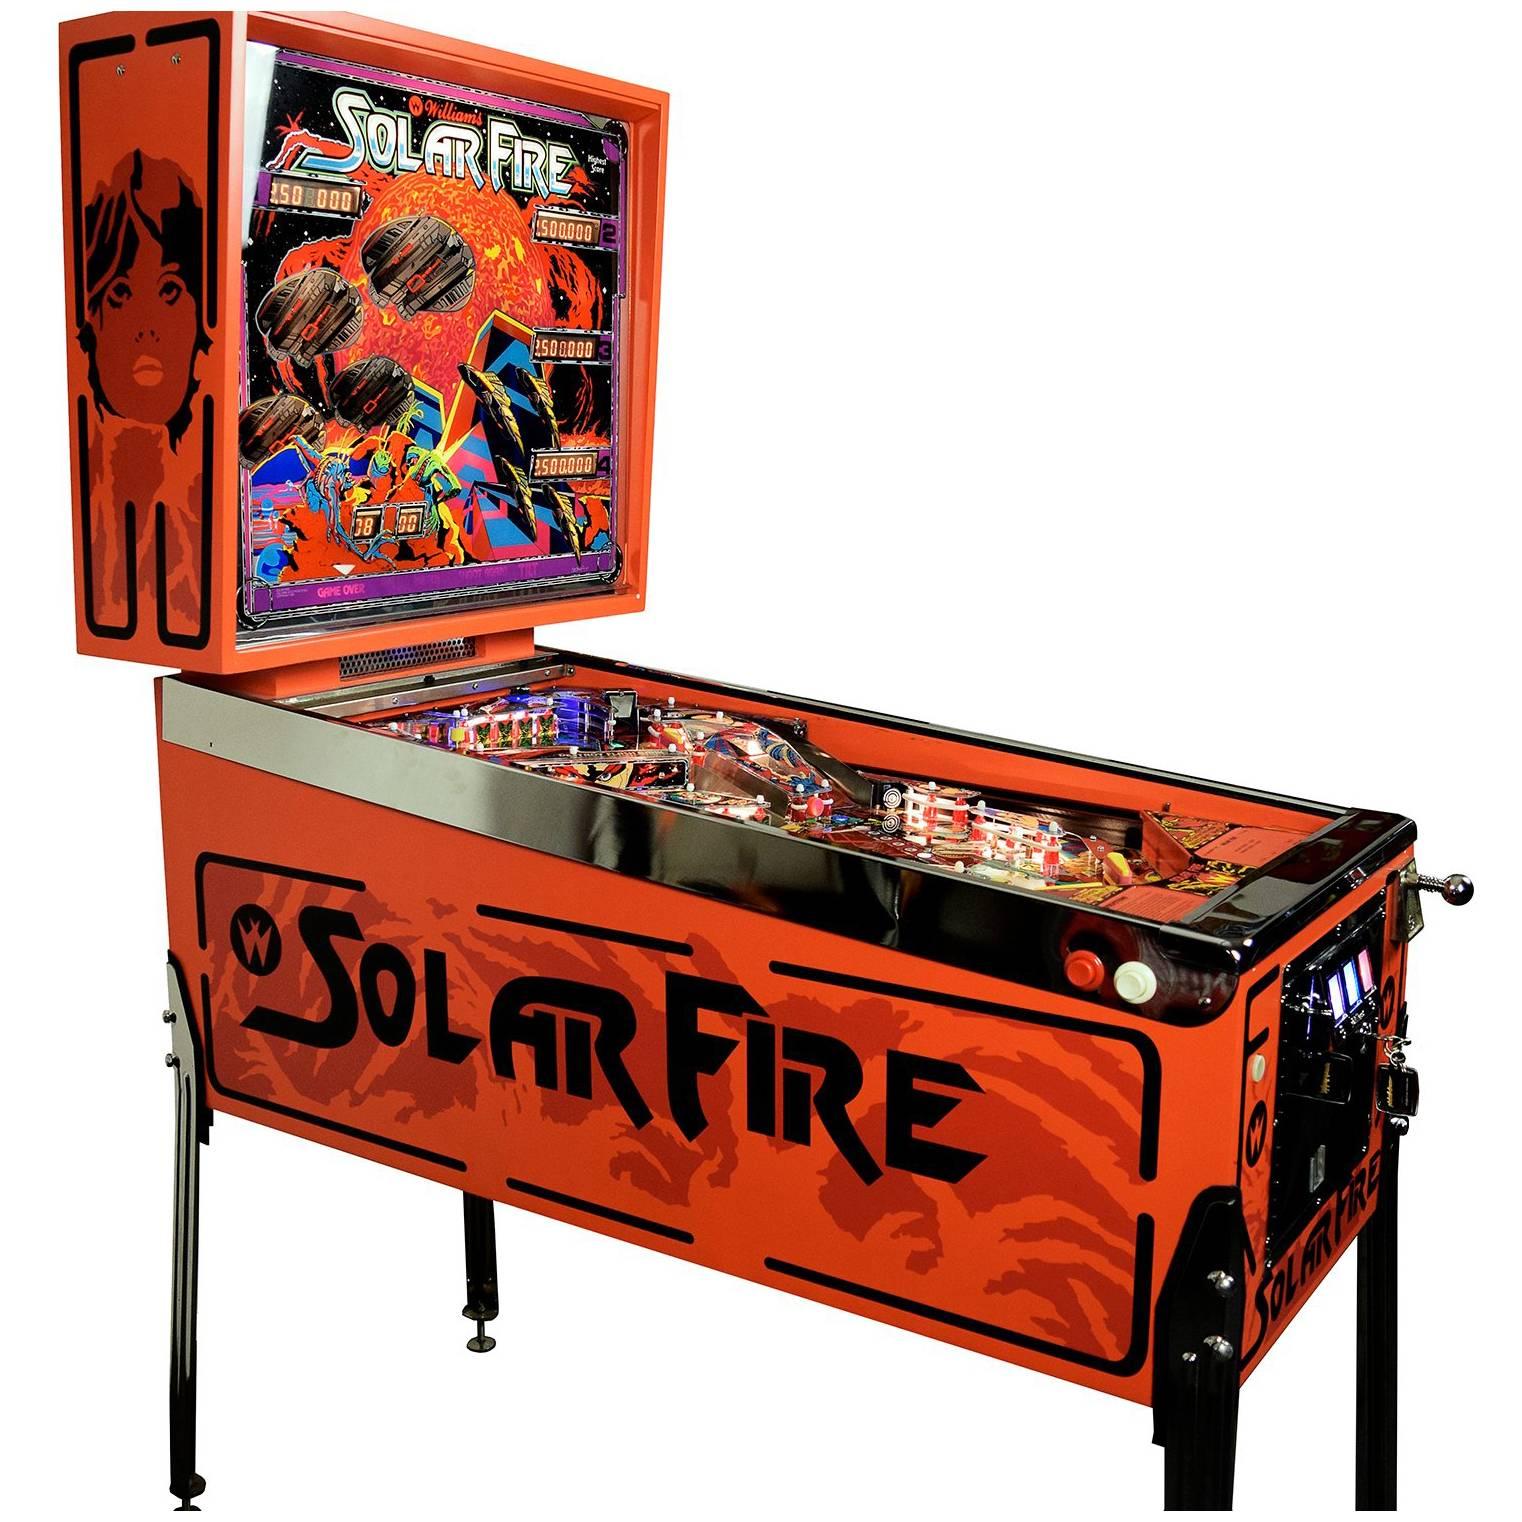 Williams Solar Fire, Vintage Pinball Machine 1981, High-End Restored